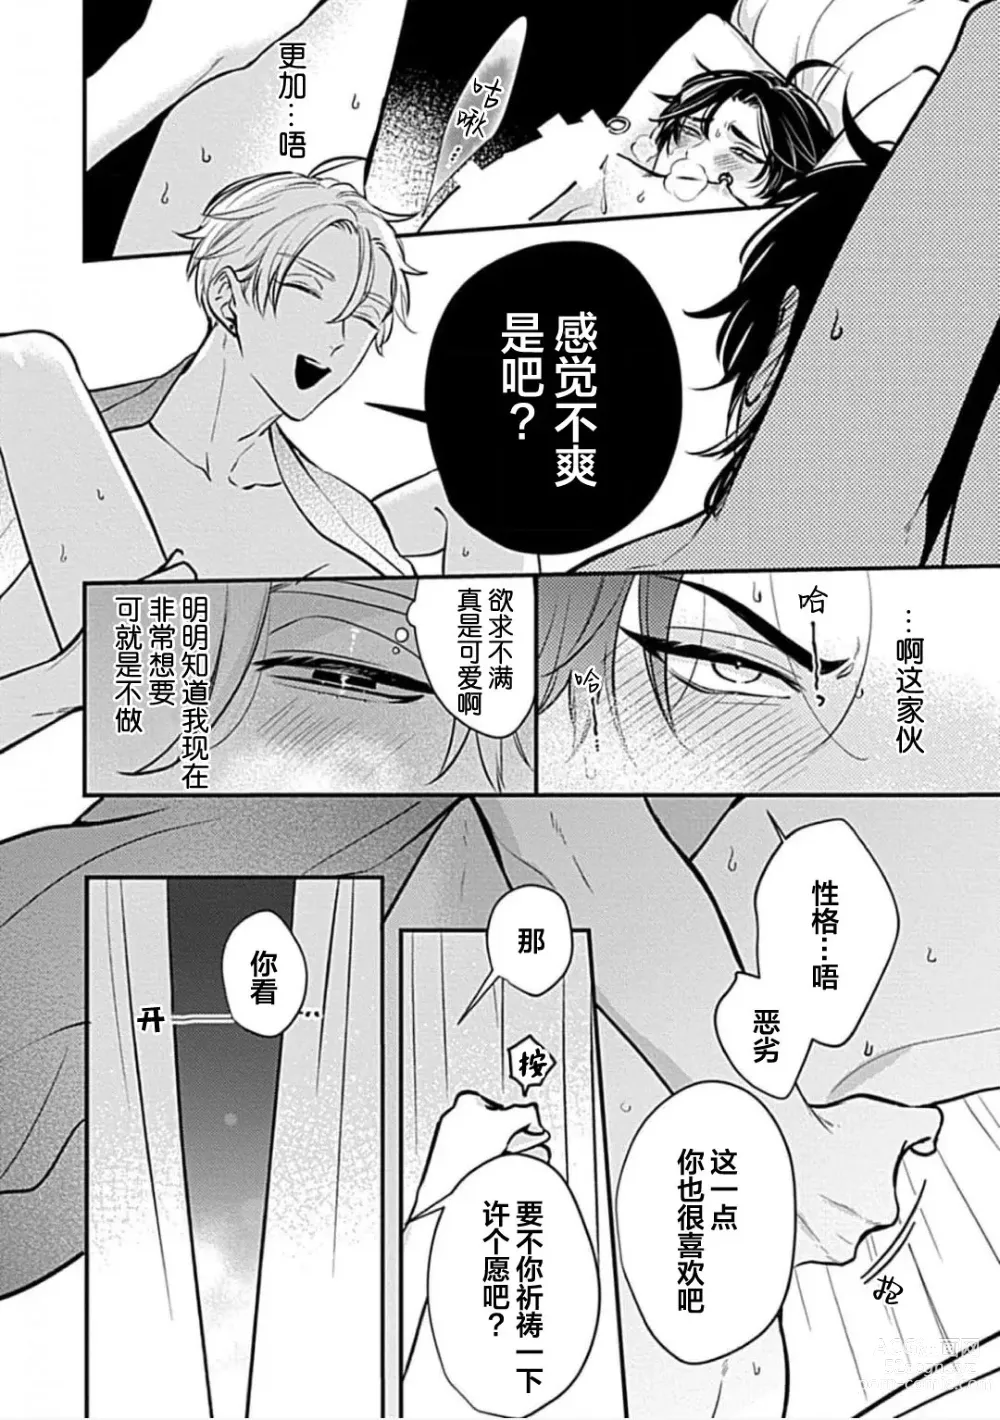 Page 13 of manga SSS Channel ｜SSS频道